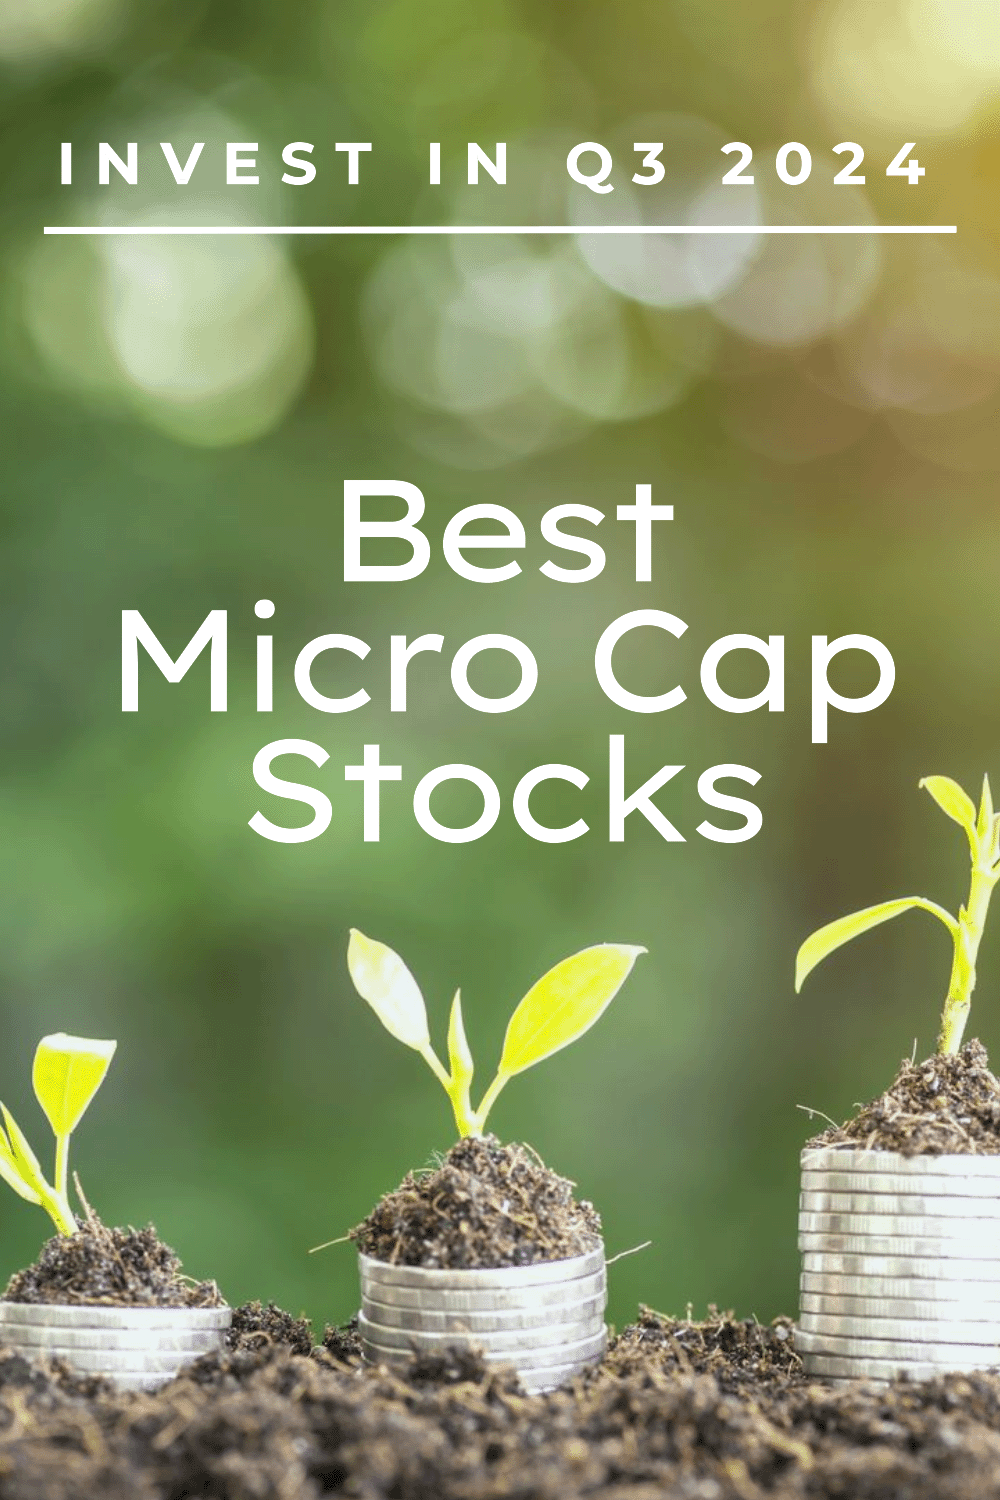 Best micro-cap stocks to invest in Q3 2024